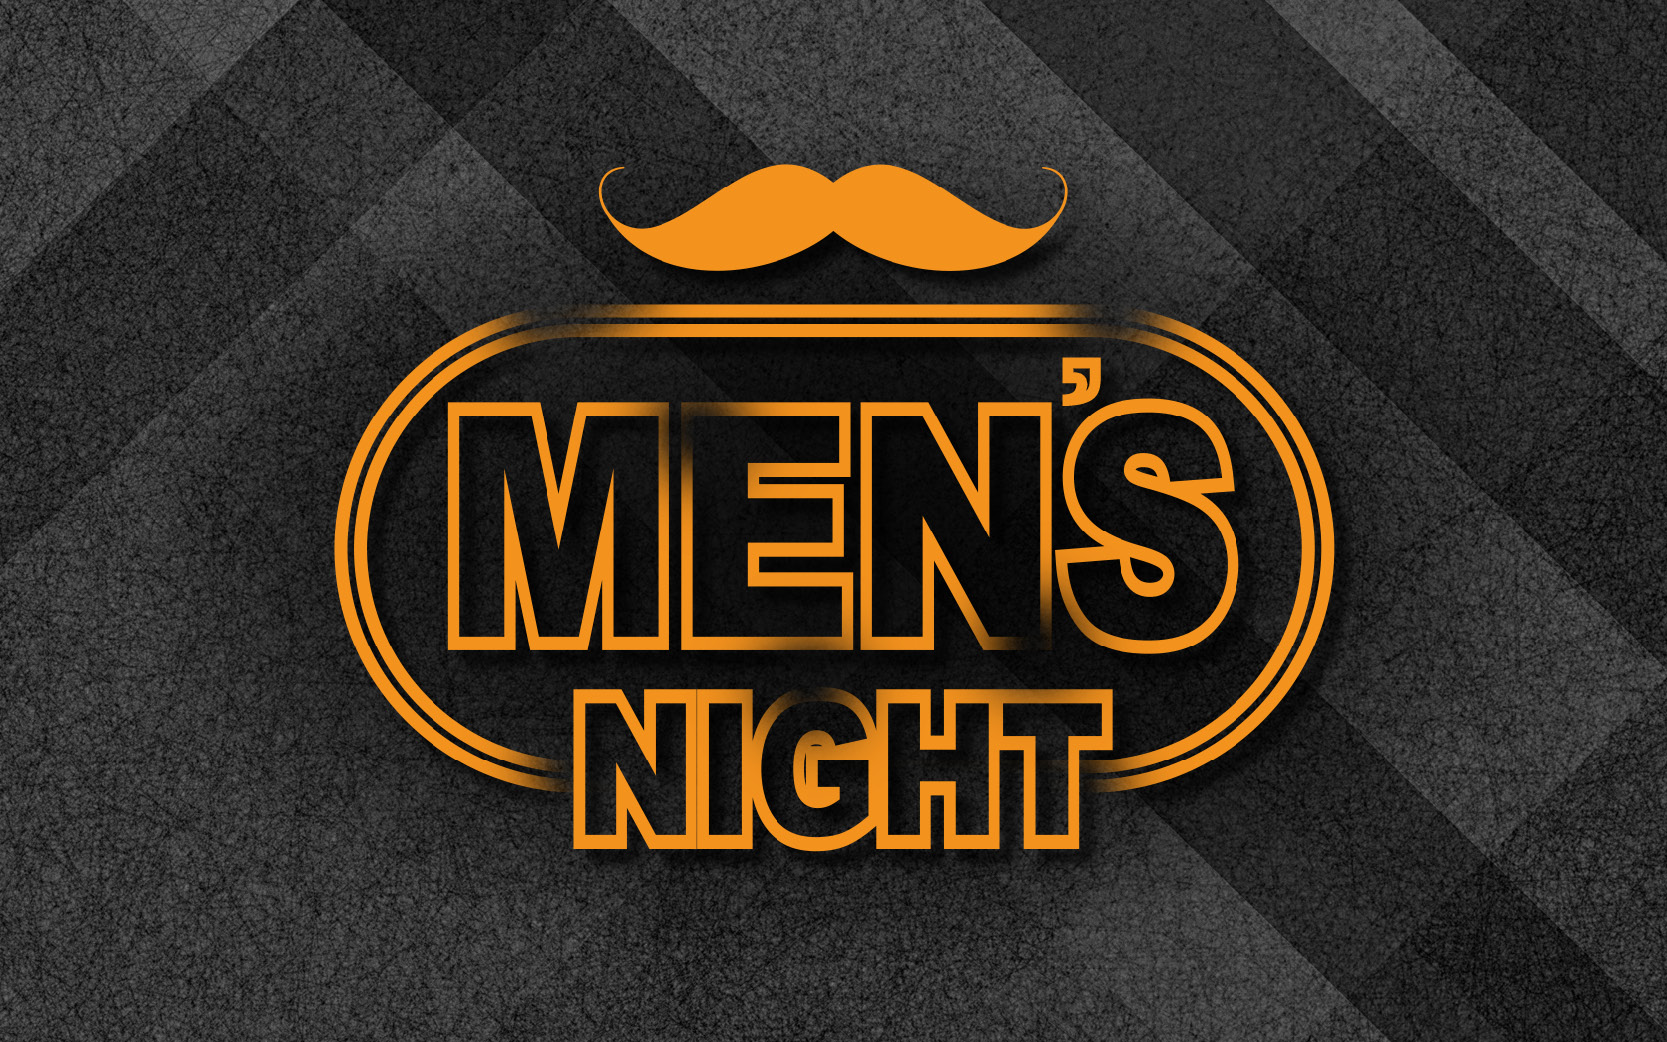 Men's night